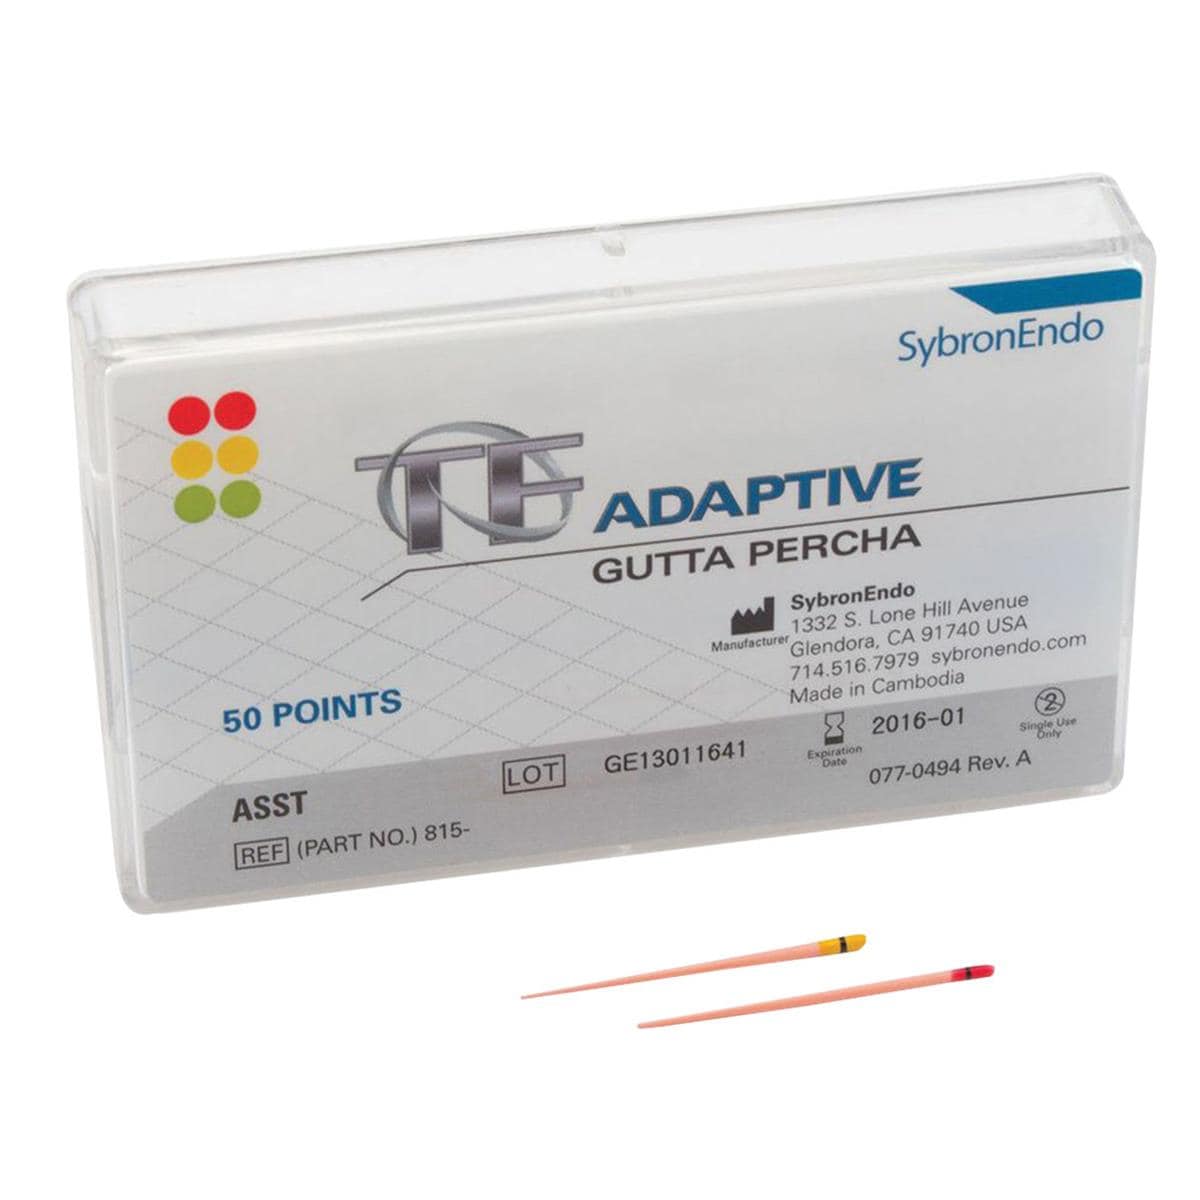 TF Adaptive Gutta Percha Small Assort SM2/SM3 50pk